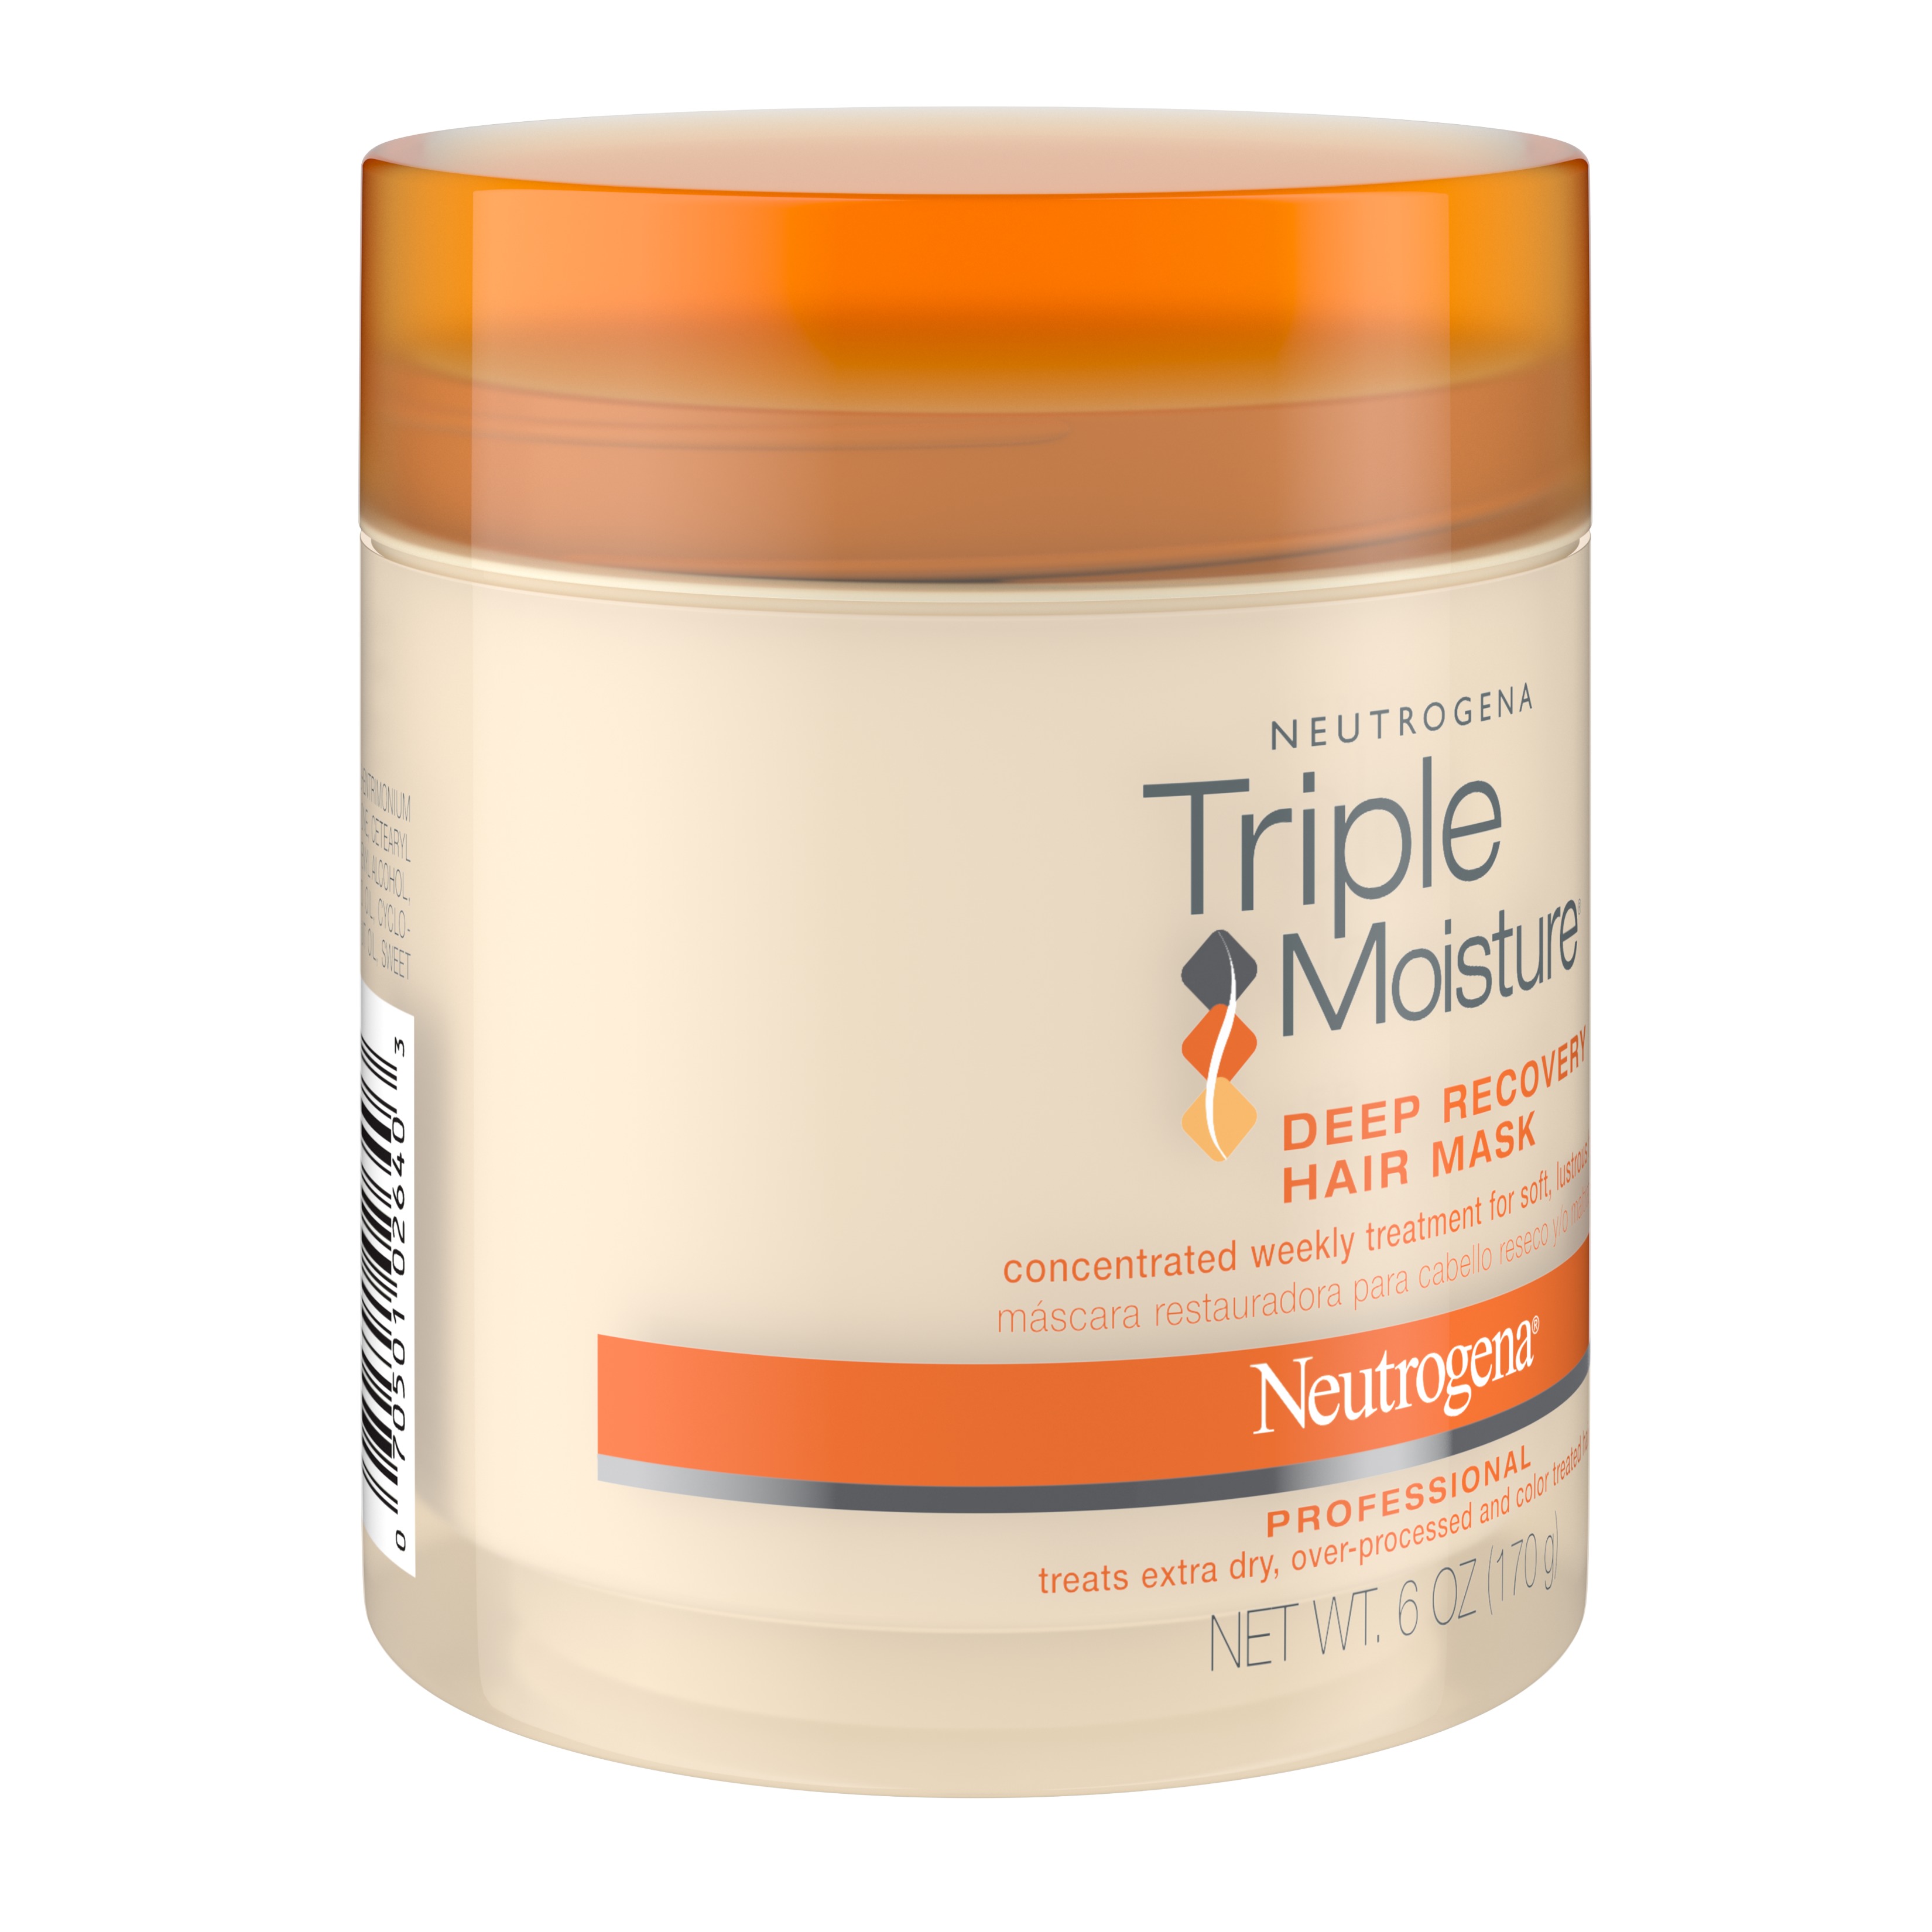 Neutrogena Triple Moisture Deep Recovery Hair Mask Moisturizer, 6 oz - image 4 of 10